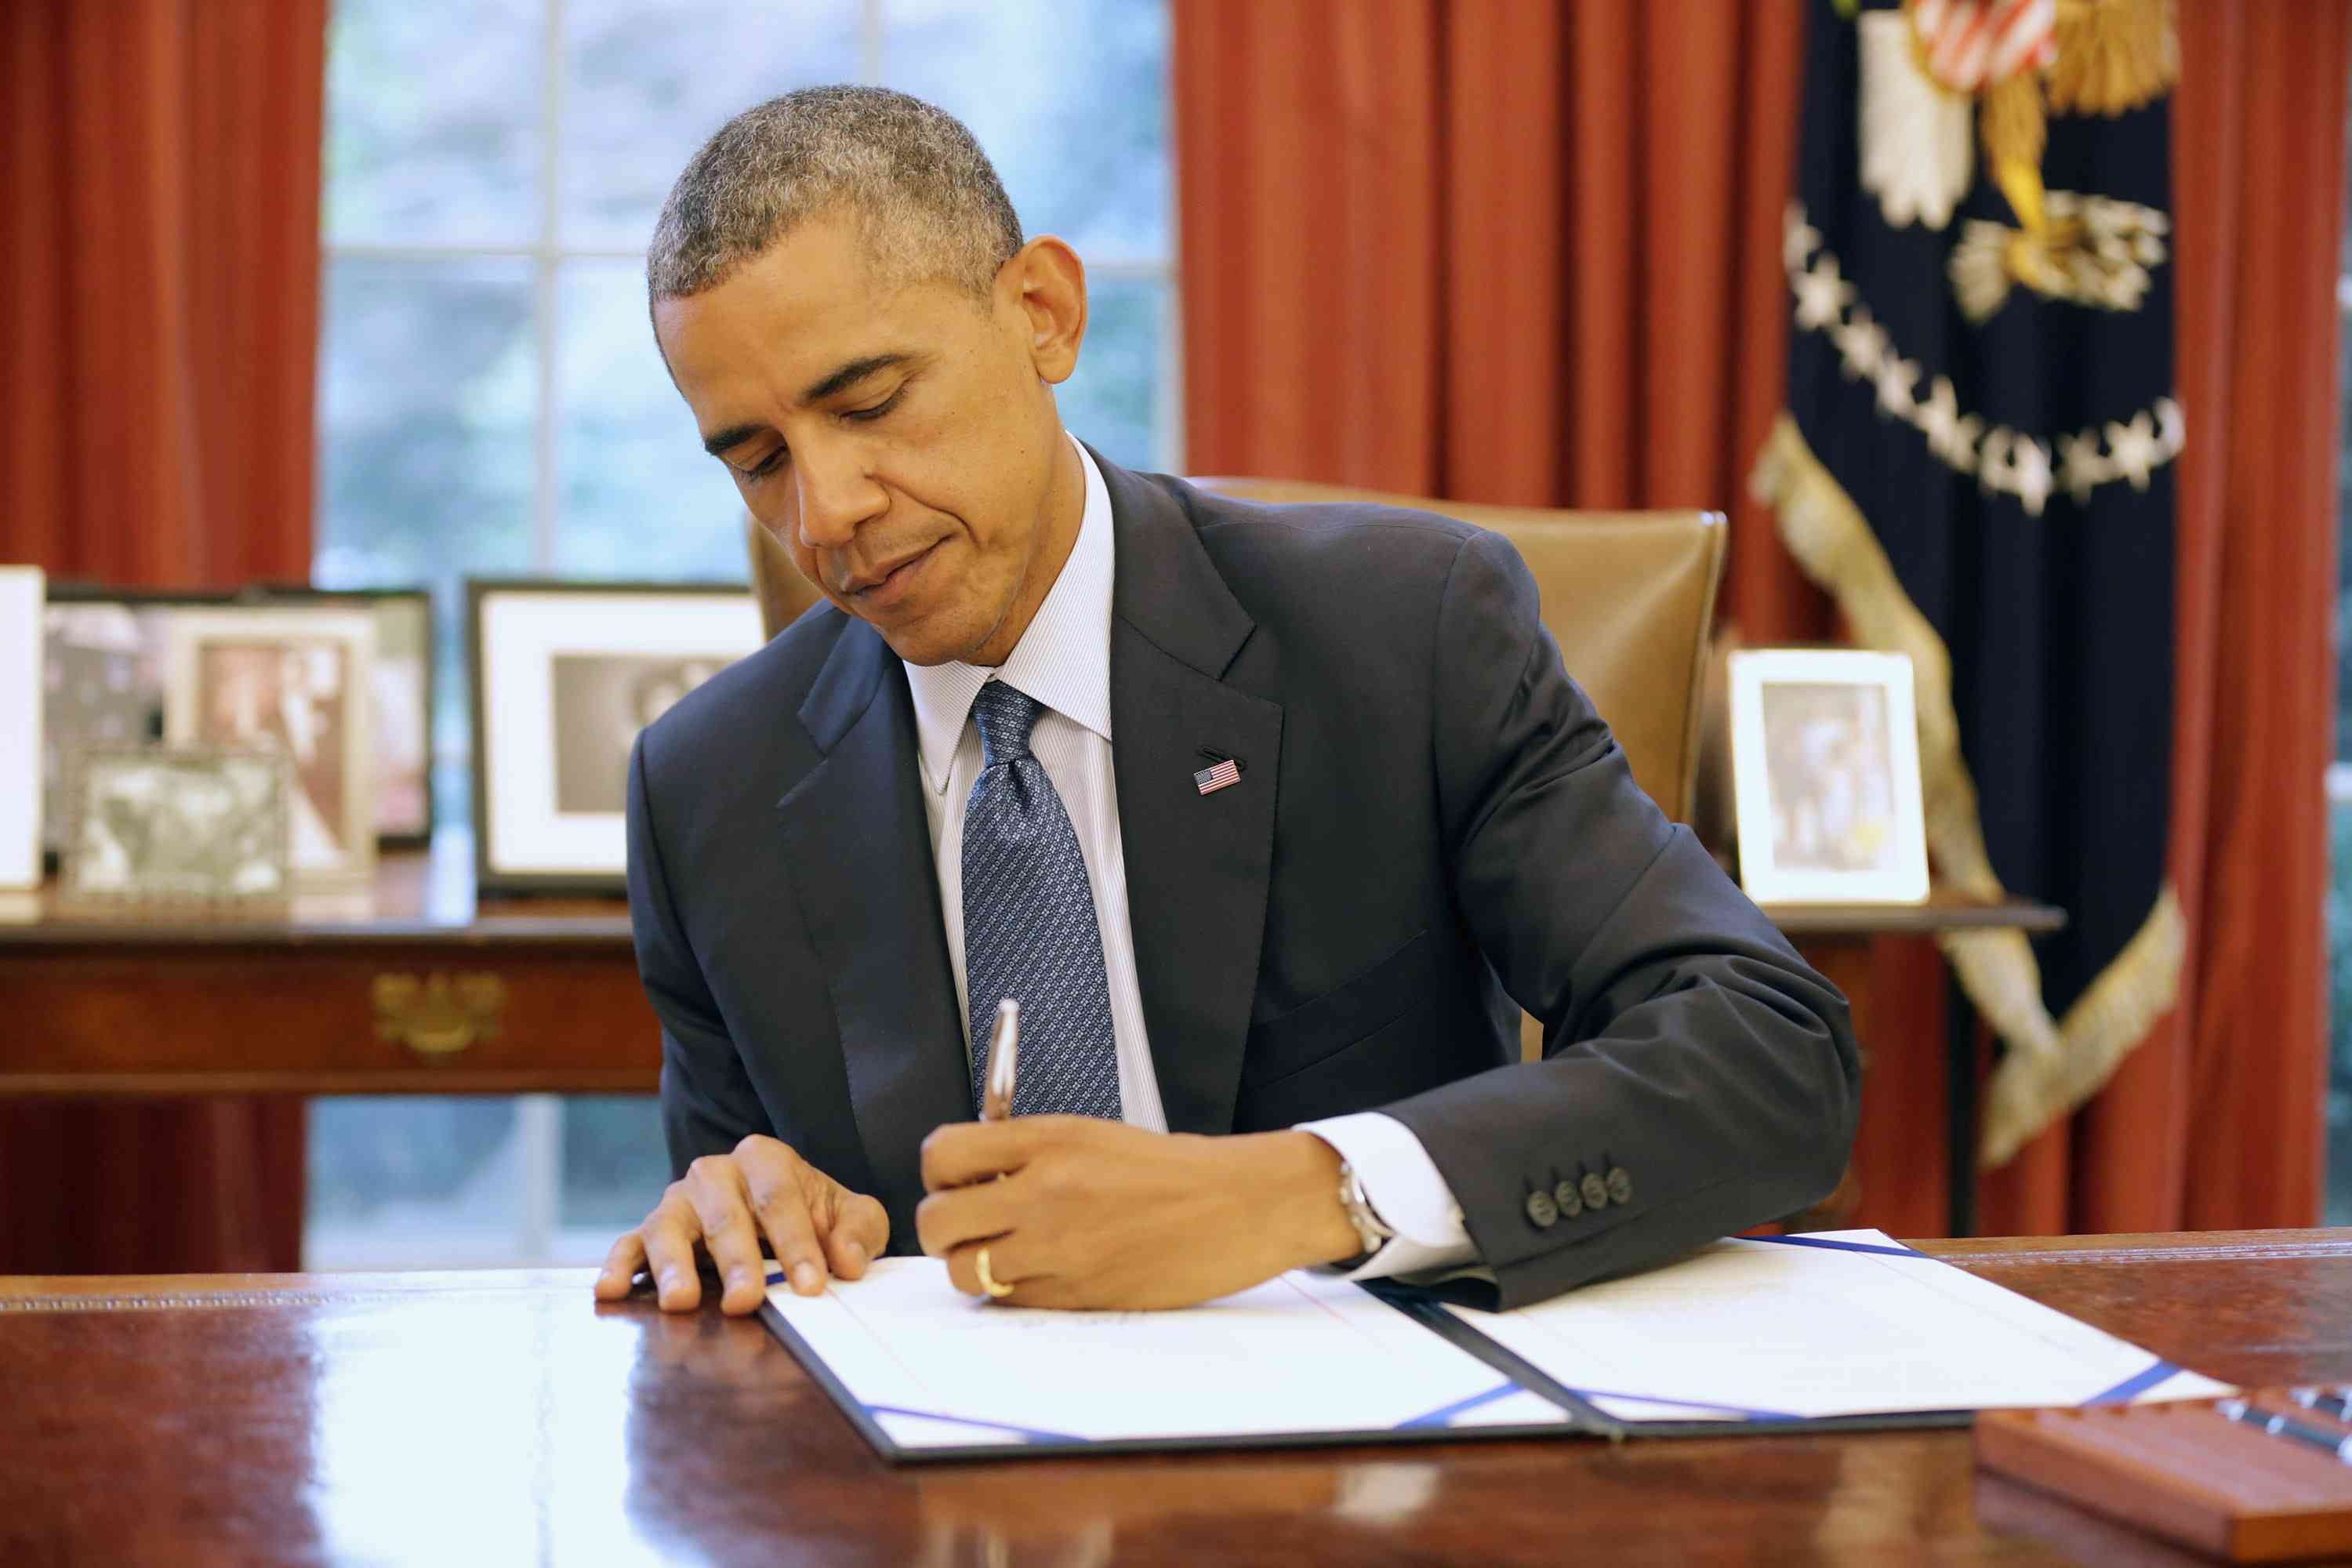 President Barack Obama signing bill in Oval Office.